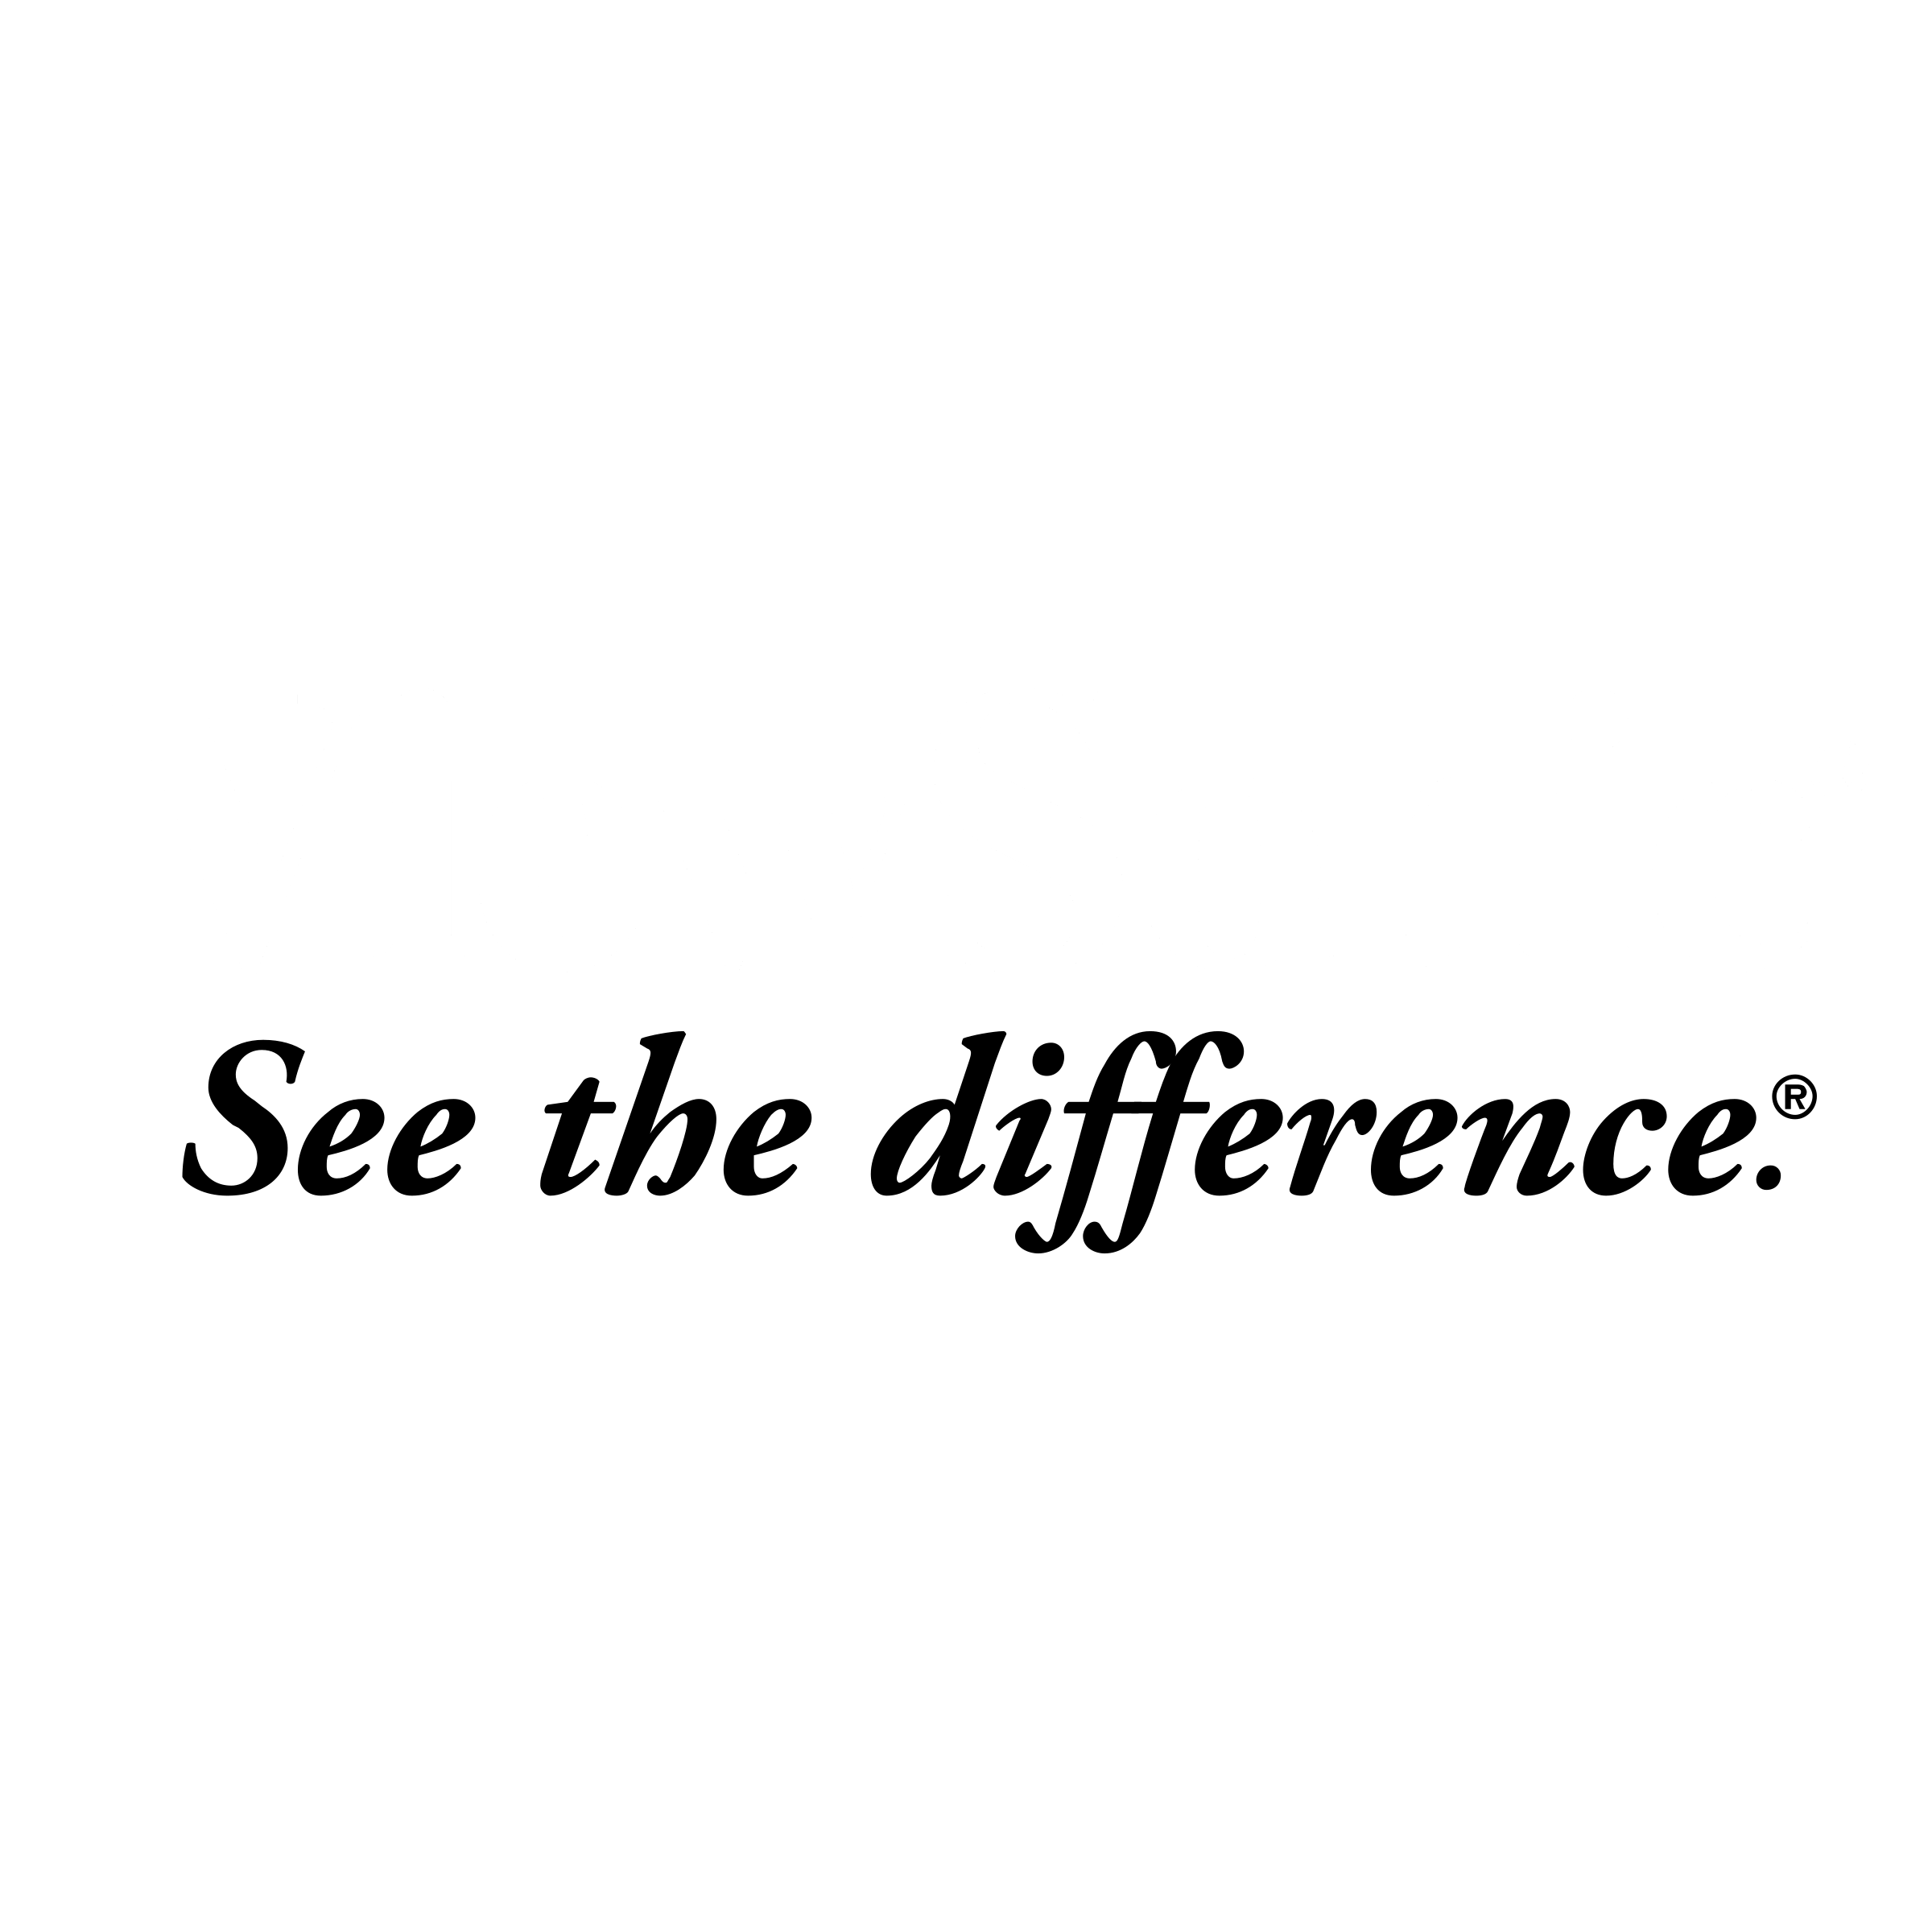 ViewSonic Logo - Viewsonic Logo PNG Transparent & SVG Vector - Freebie Supply